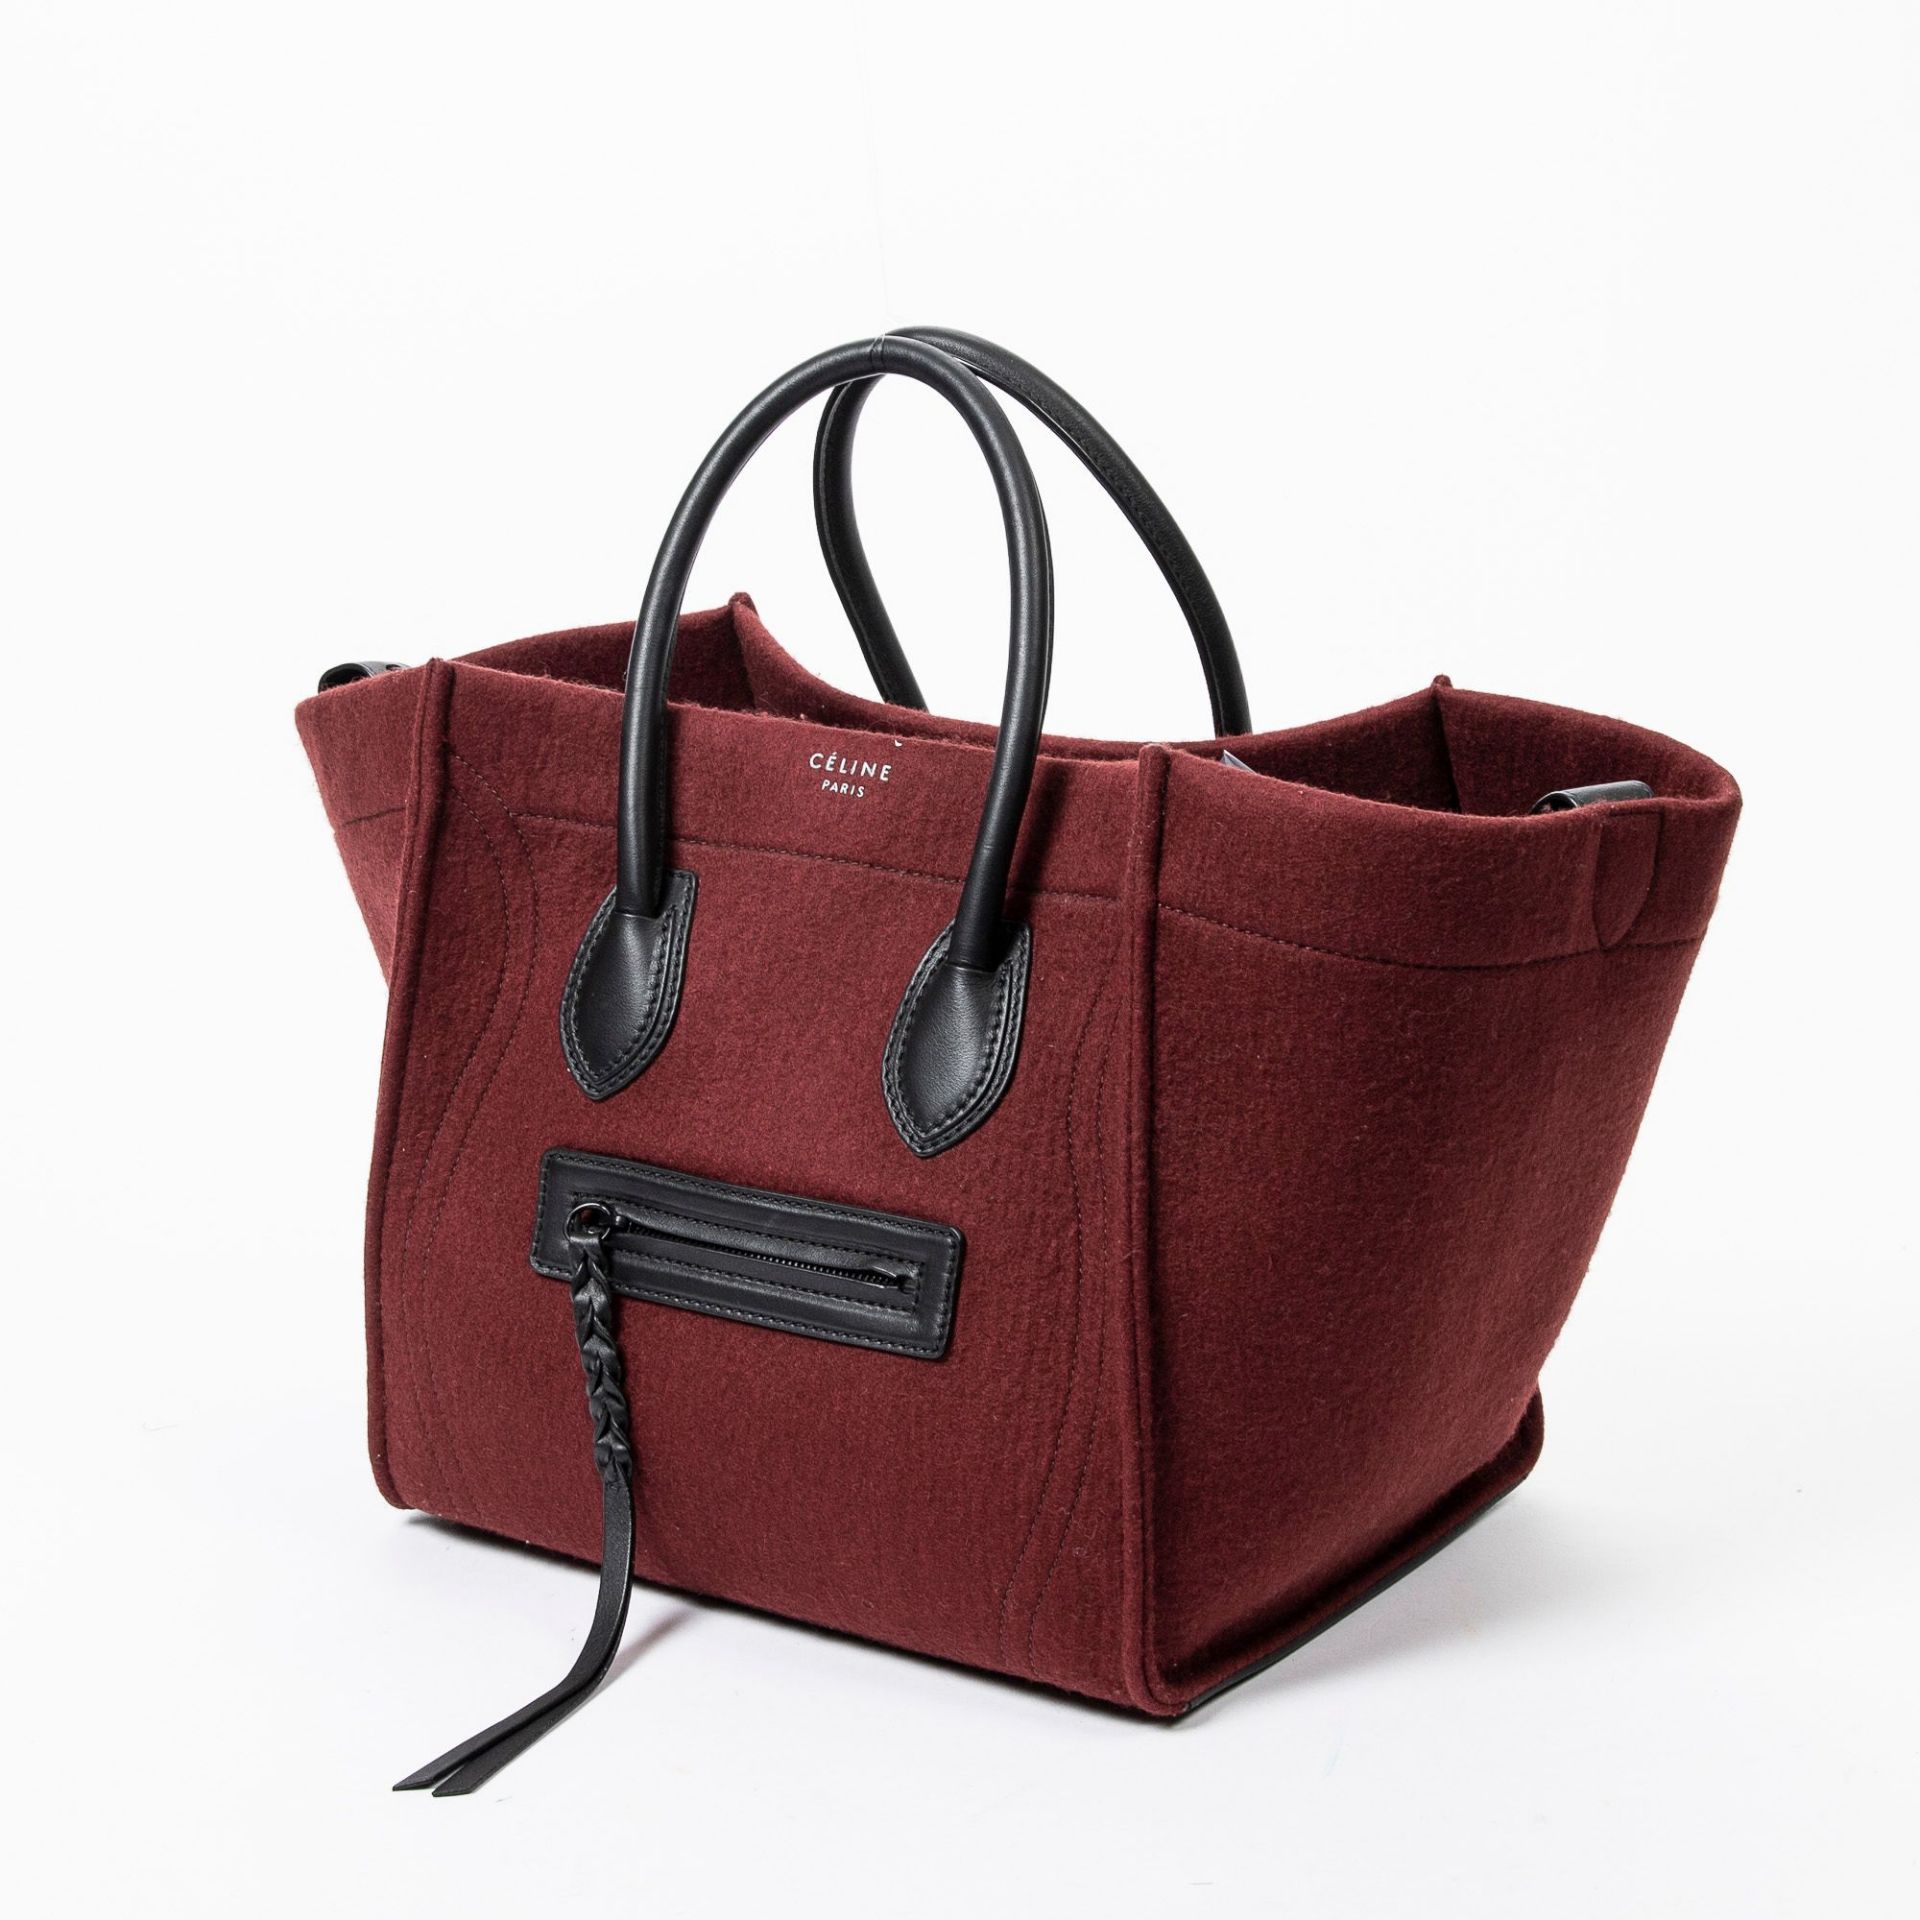 RRP £2500 Celine Phantom Luggage Handbag in Red and Black - AAN4455 - Grade A Please Contact Us - Image 2 of 3